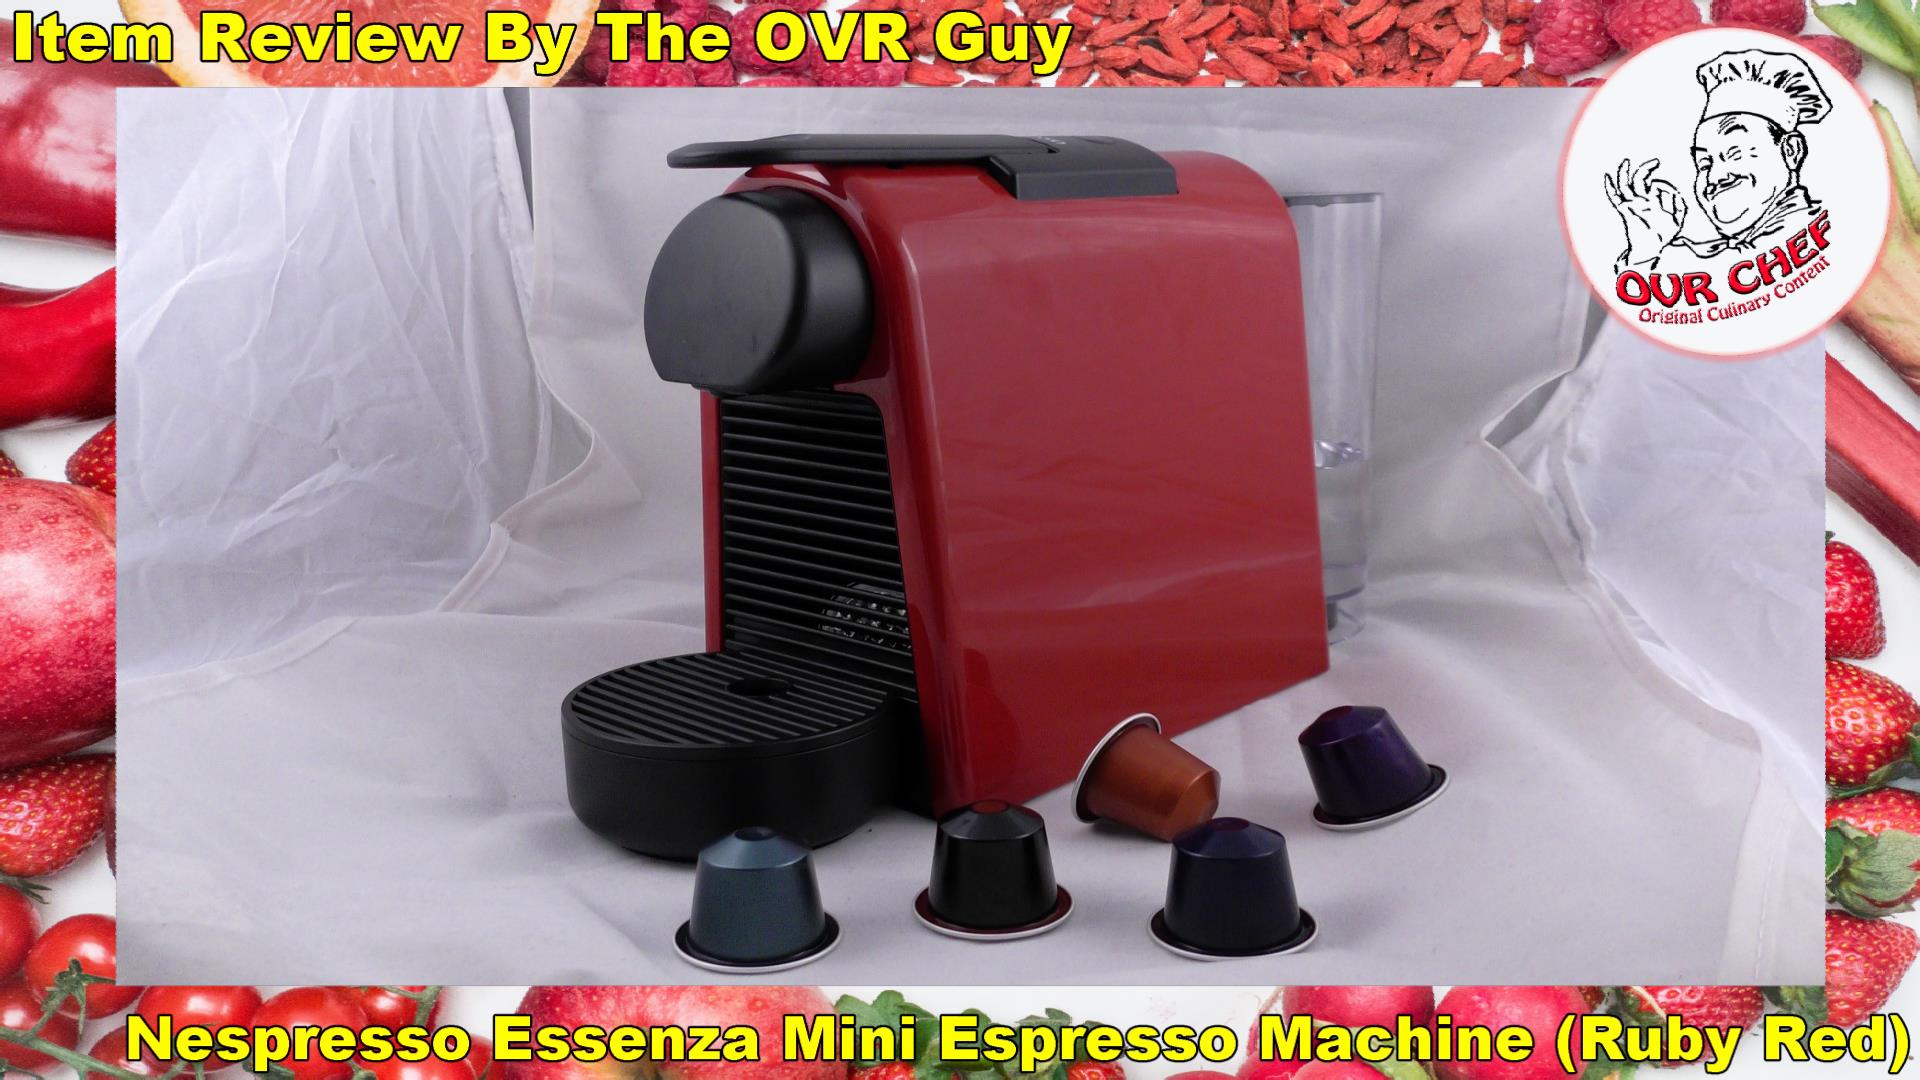 https://www.originalvideoreviews.com/wp-content/uploads/2018/11/Item-review-Nespresso-Essenza-Mini-Espresso-Machine-Rubi-RedThumbnail-Text.jpg